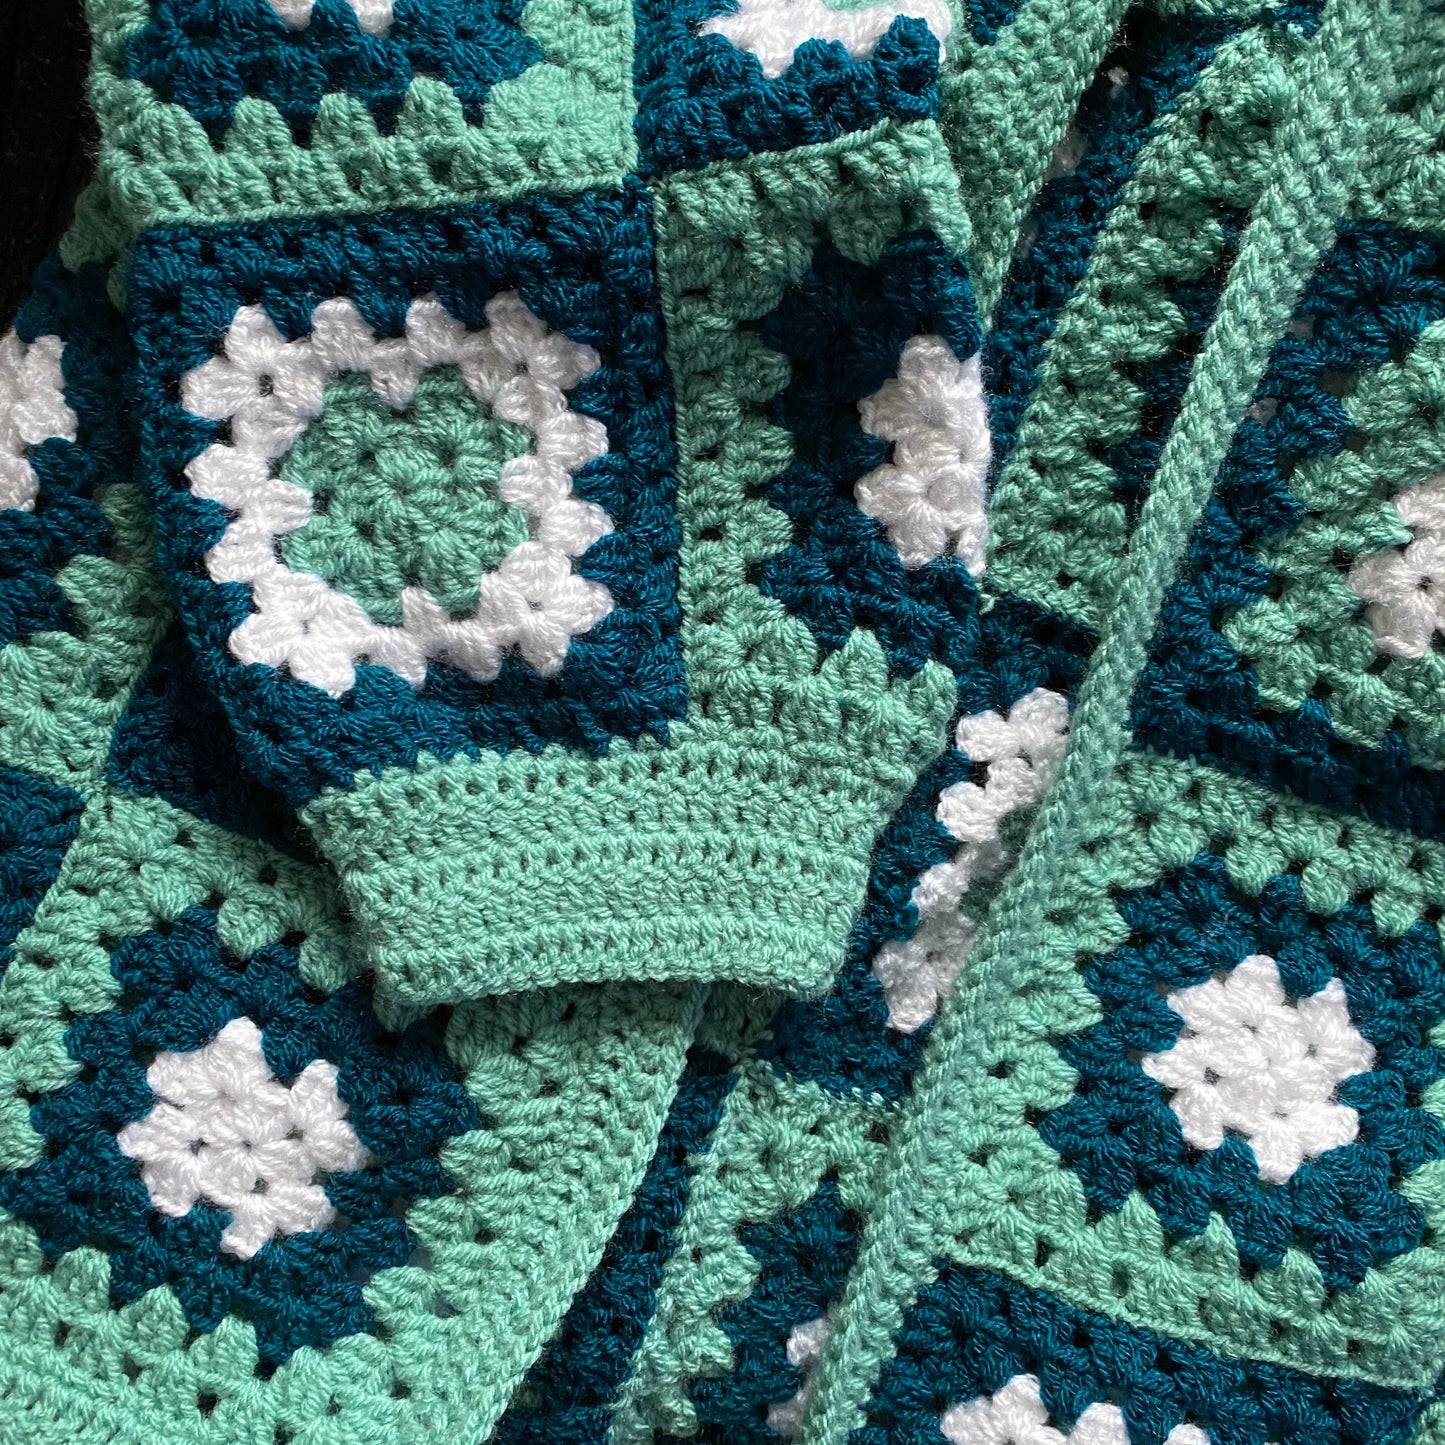 The FARRAH ~ S/M retro 60s 70s handmade crochet granny square cardigan